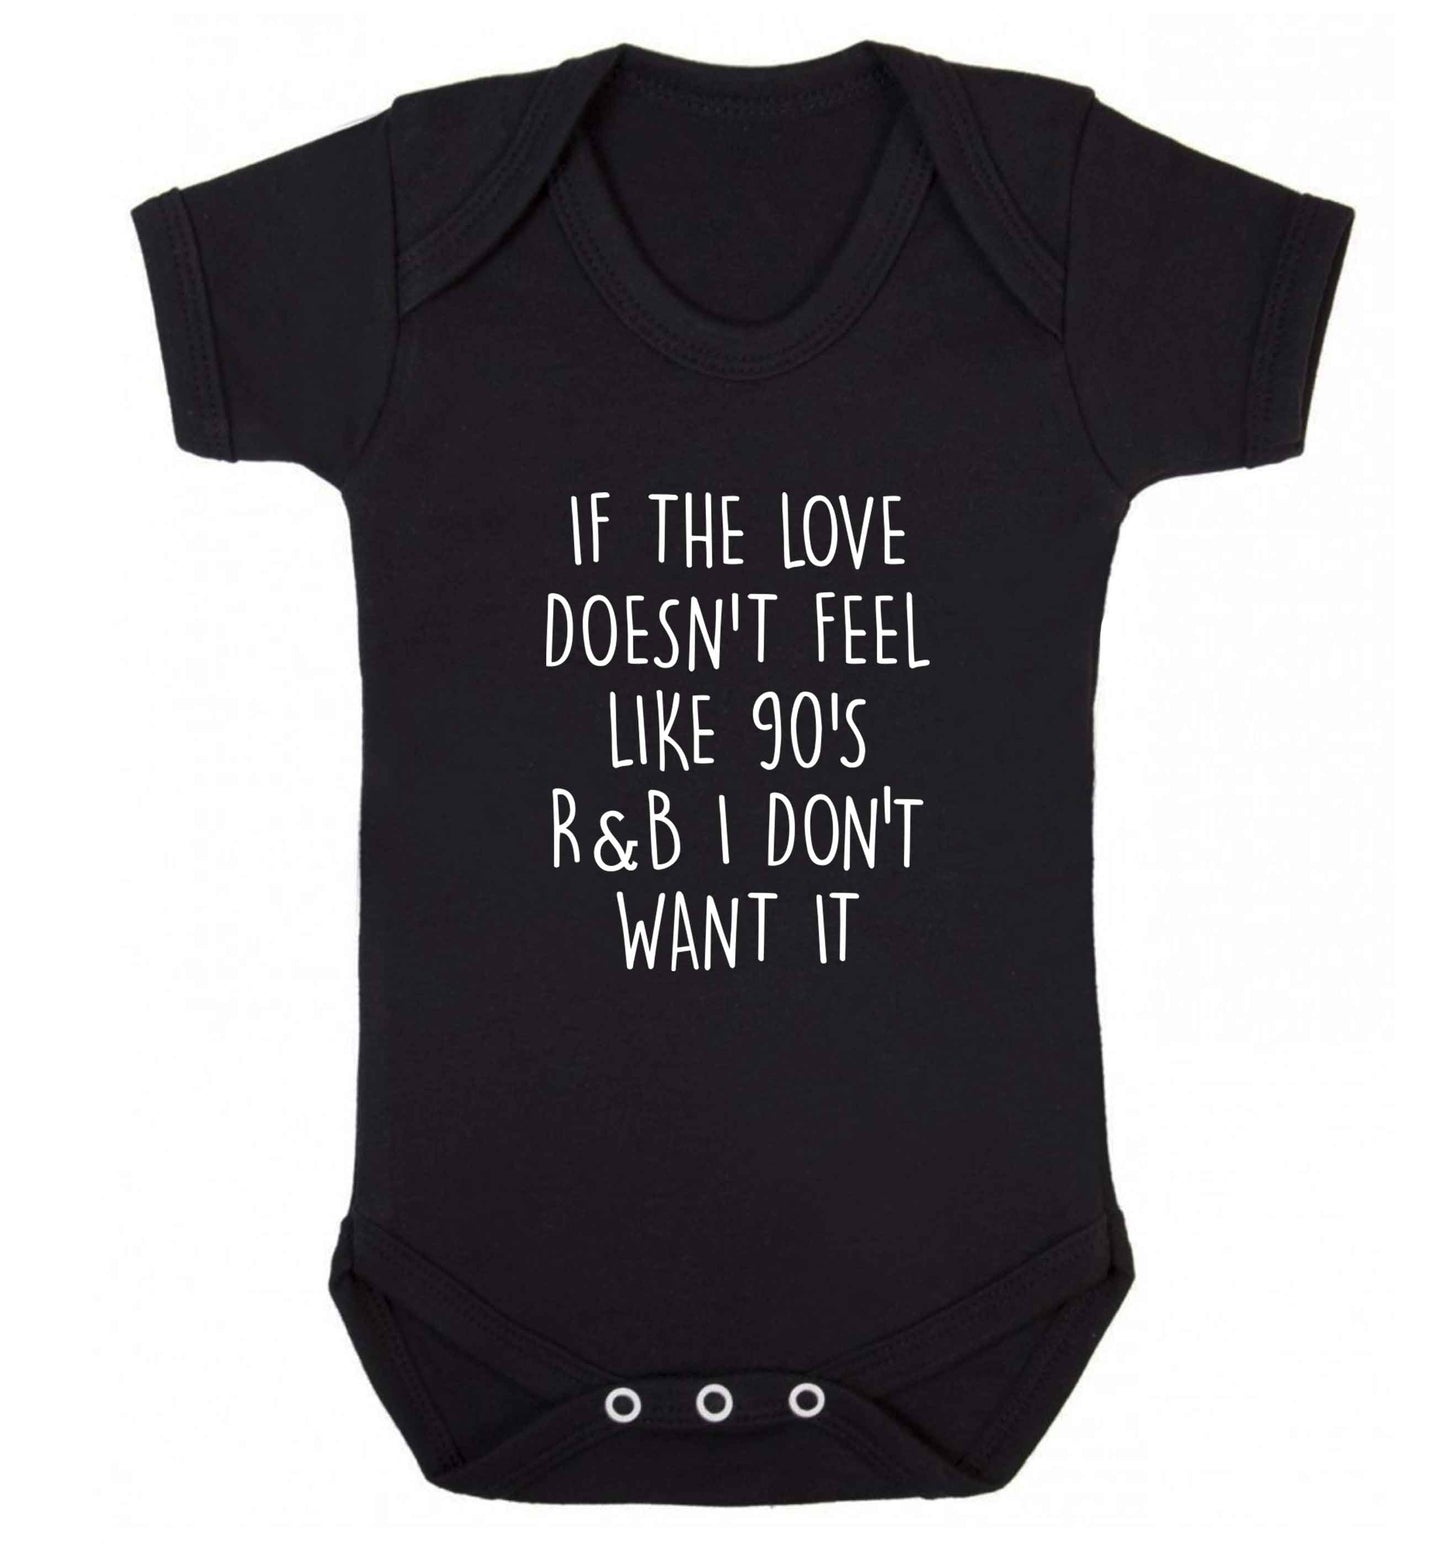 If the love doesn't feel like 90's r&b I don't want it baby vest black 18-24 months